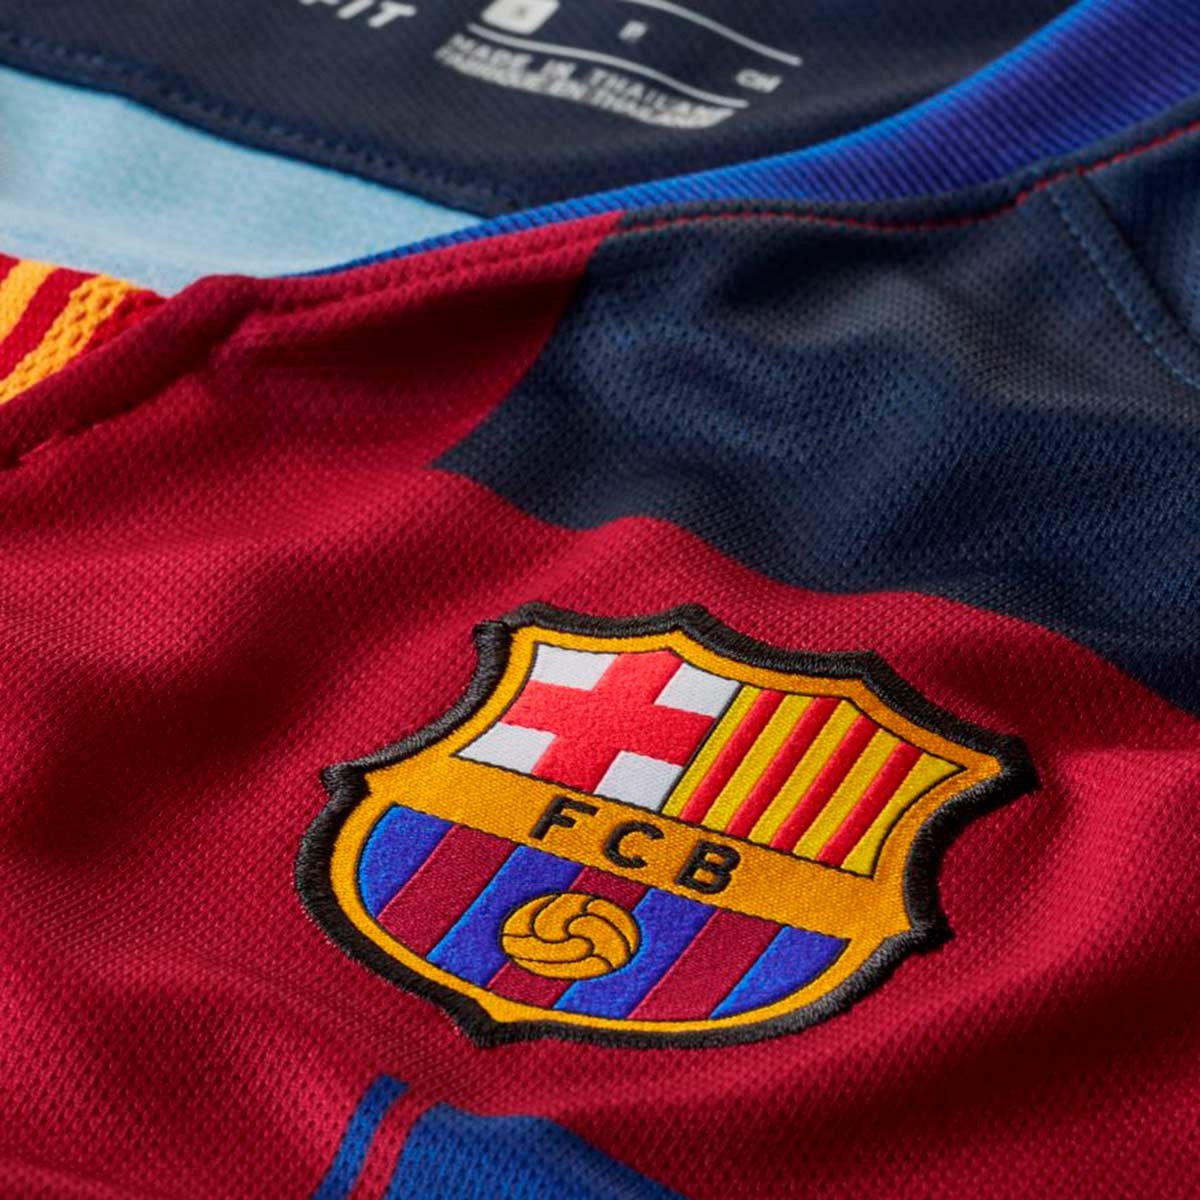 barcelona jersey 20 years